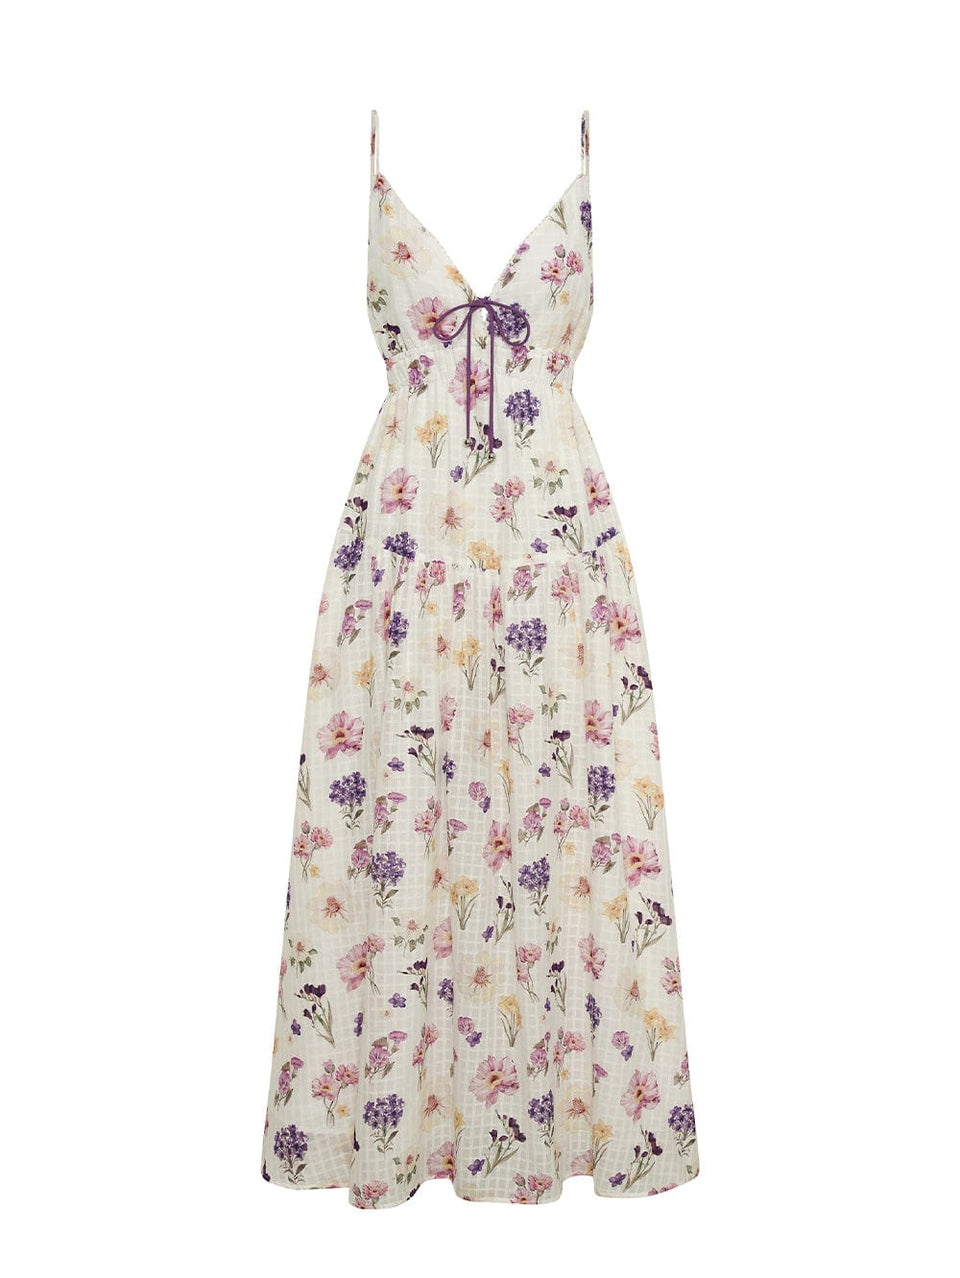 Phoebe Maxi Dress KIVARI | Ivory and purple maxi dress